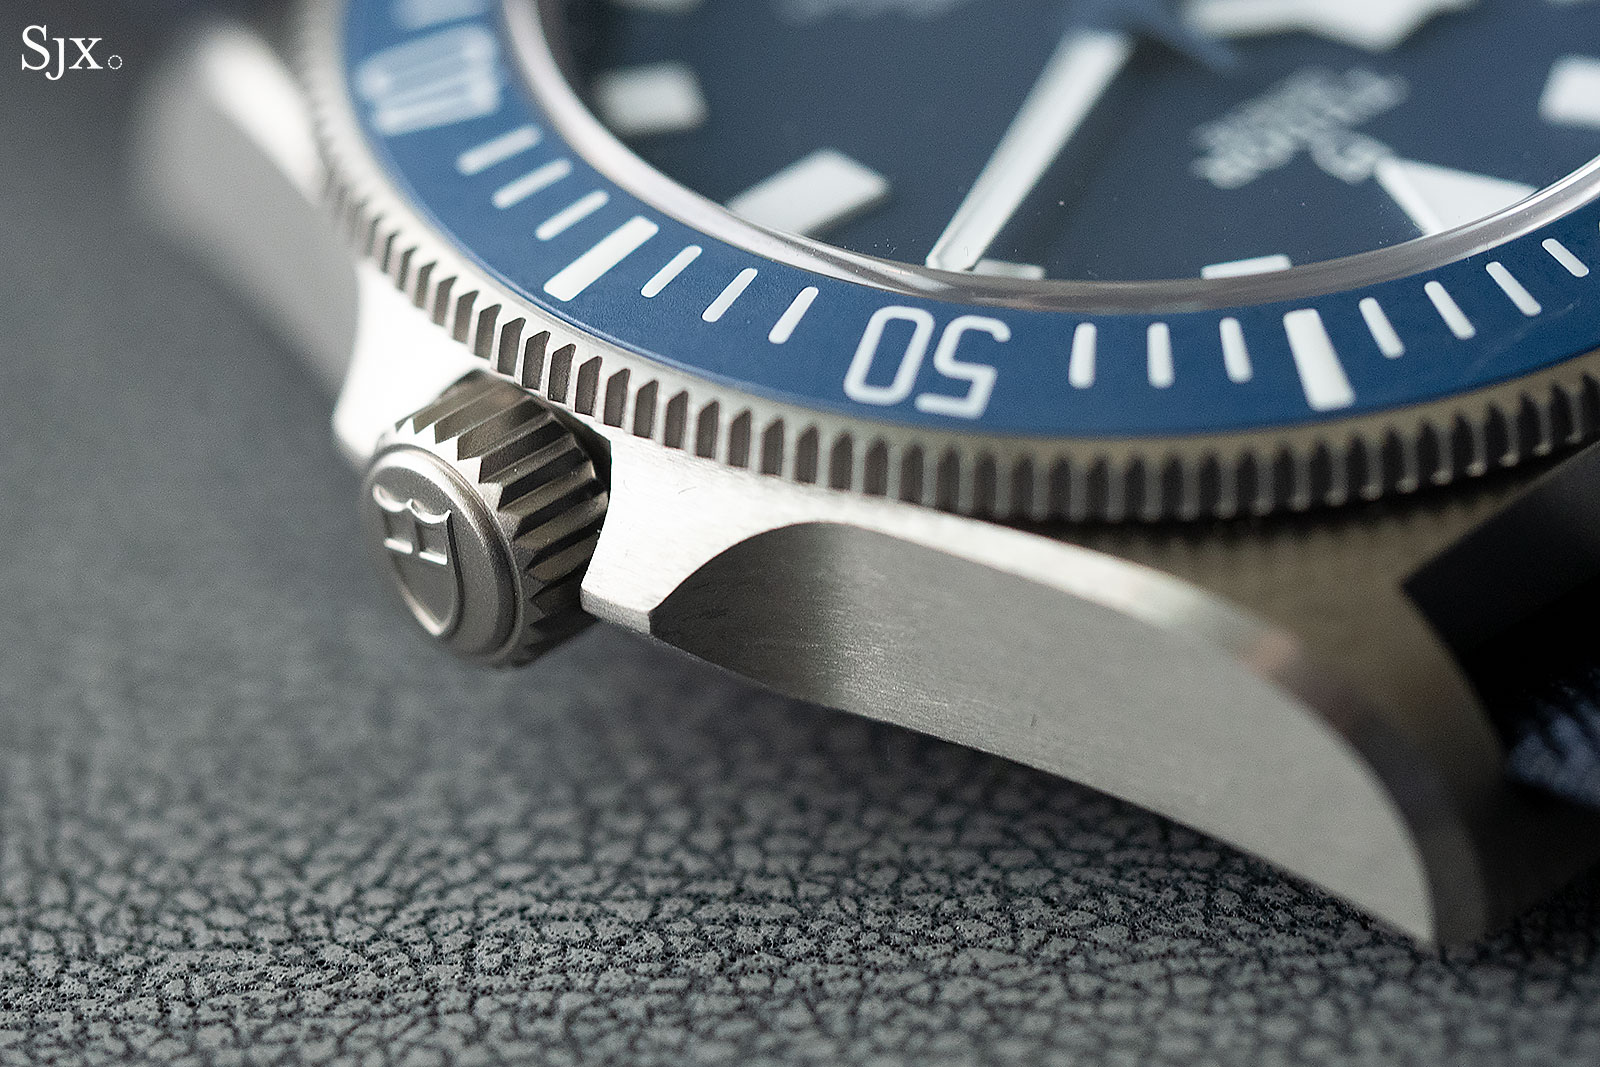 Hands-On: Tudor Pelagos FXD “Marine Nationale” | SJX Watches